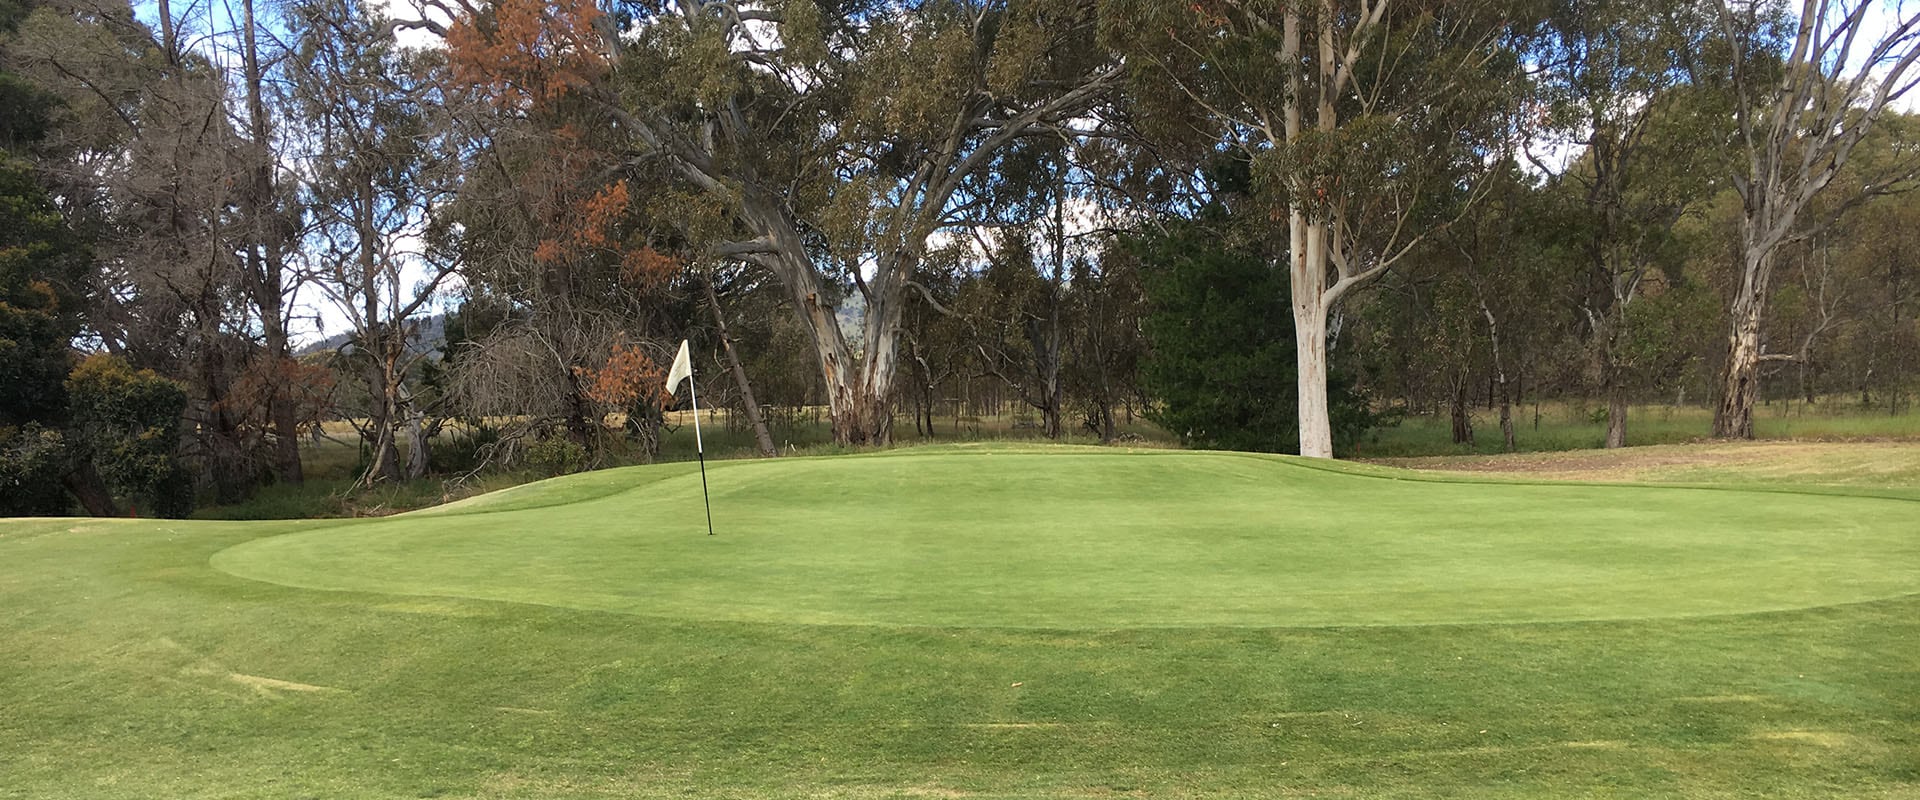 Euroa Golf Club VIC 3666 Australia